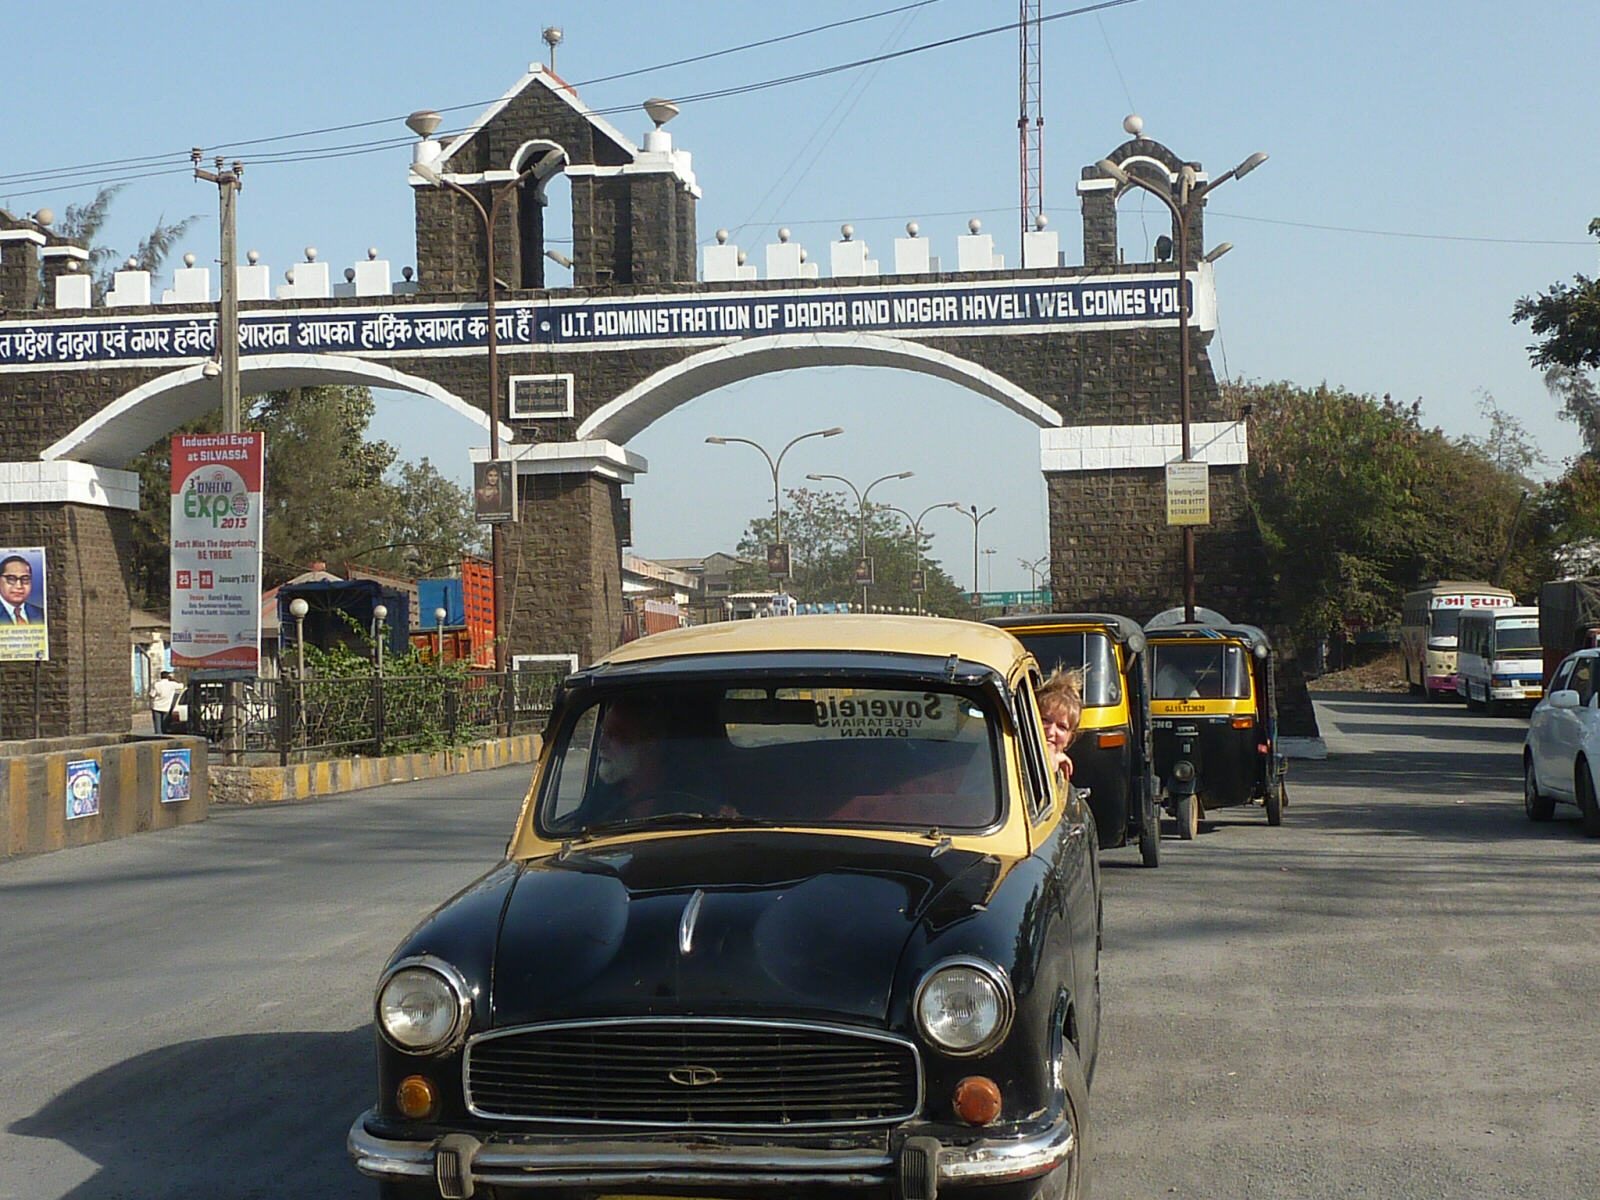 The gateway into Dadra and Nagar Haveli state, India